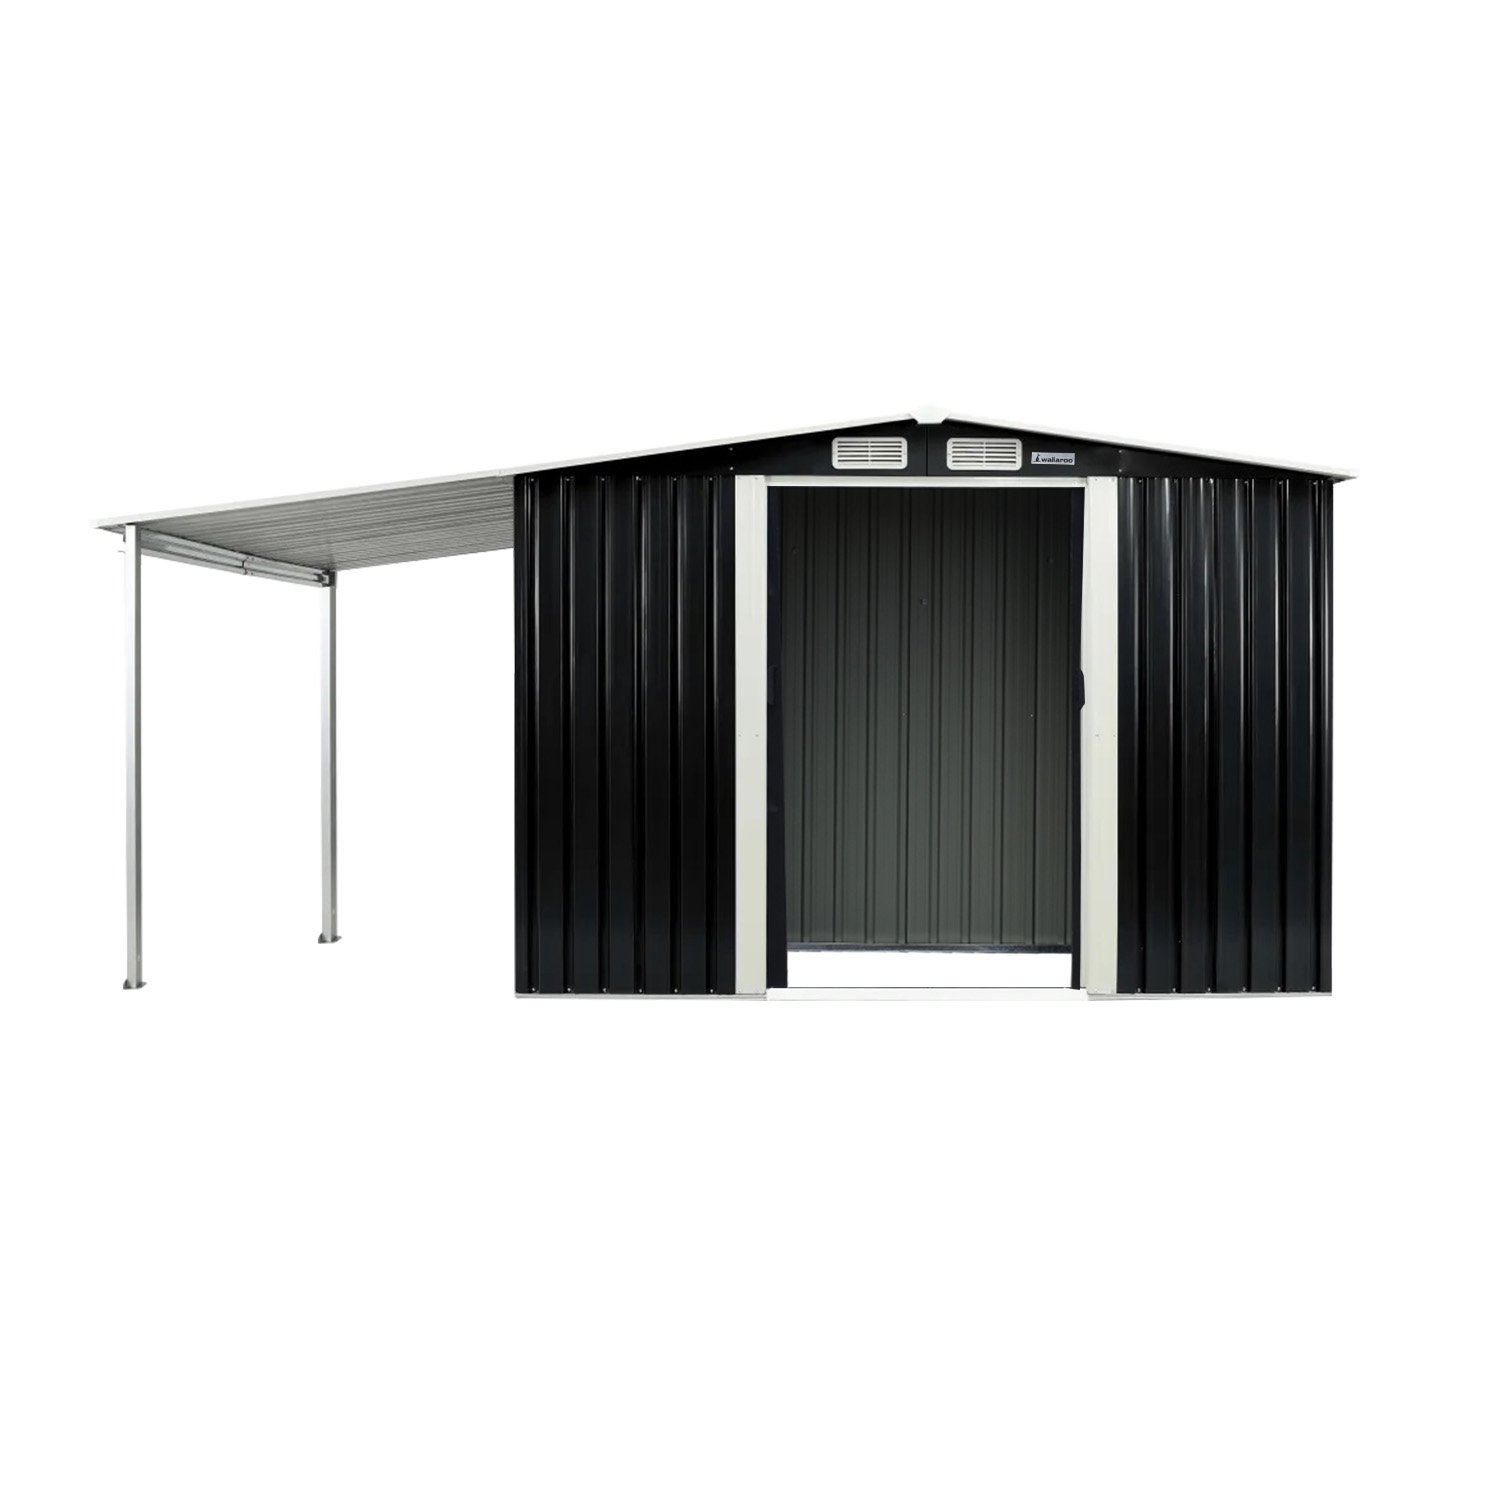 Wallaroo 8x8ft Zinc Steel Garden Shed with Open Storage - Black 1